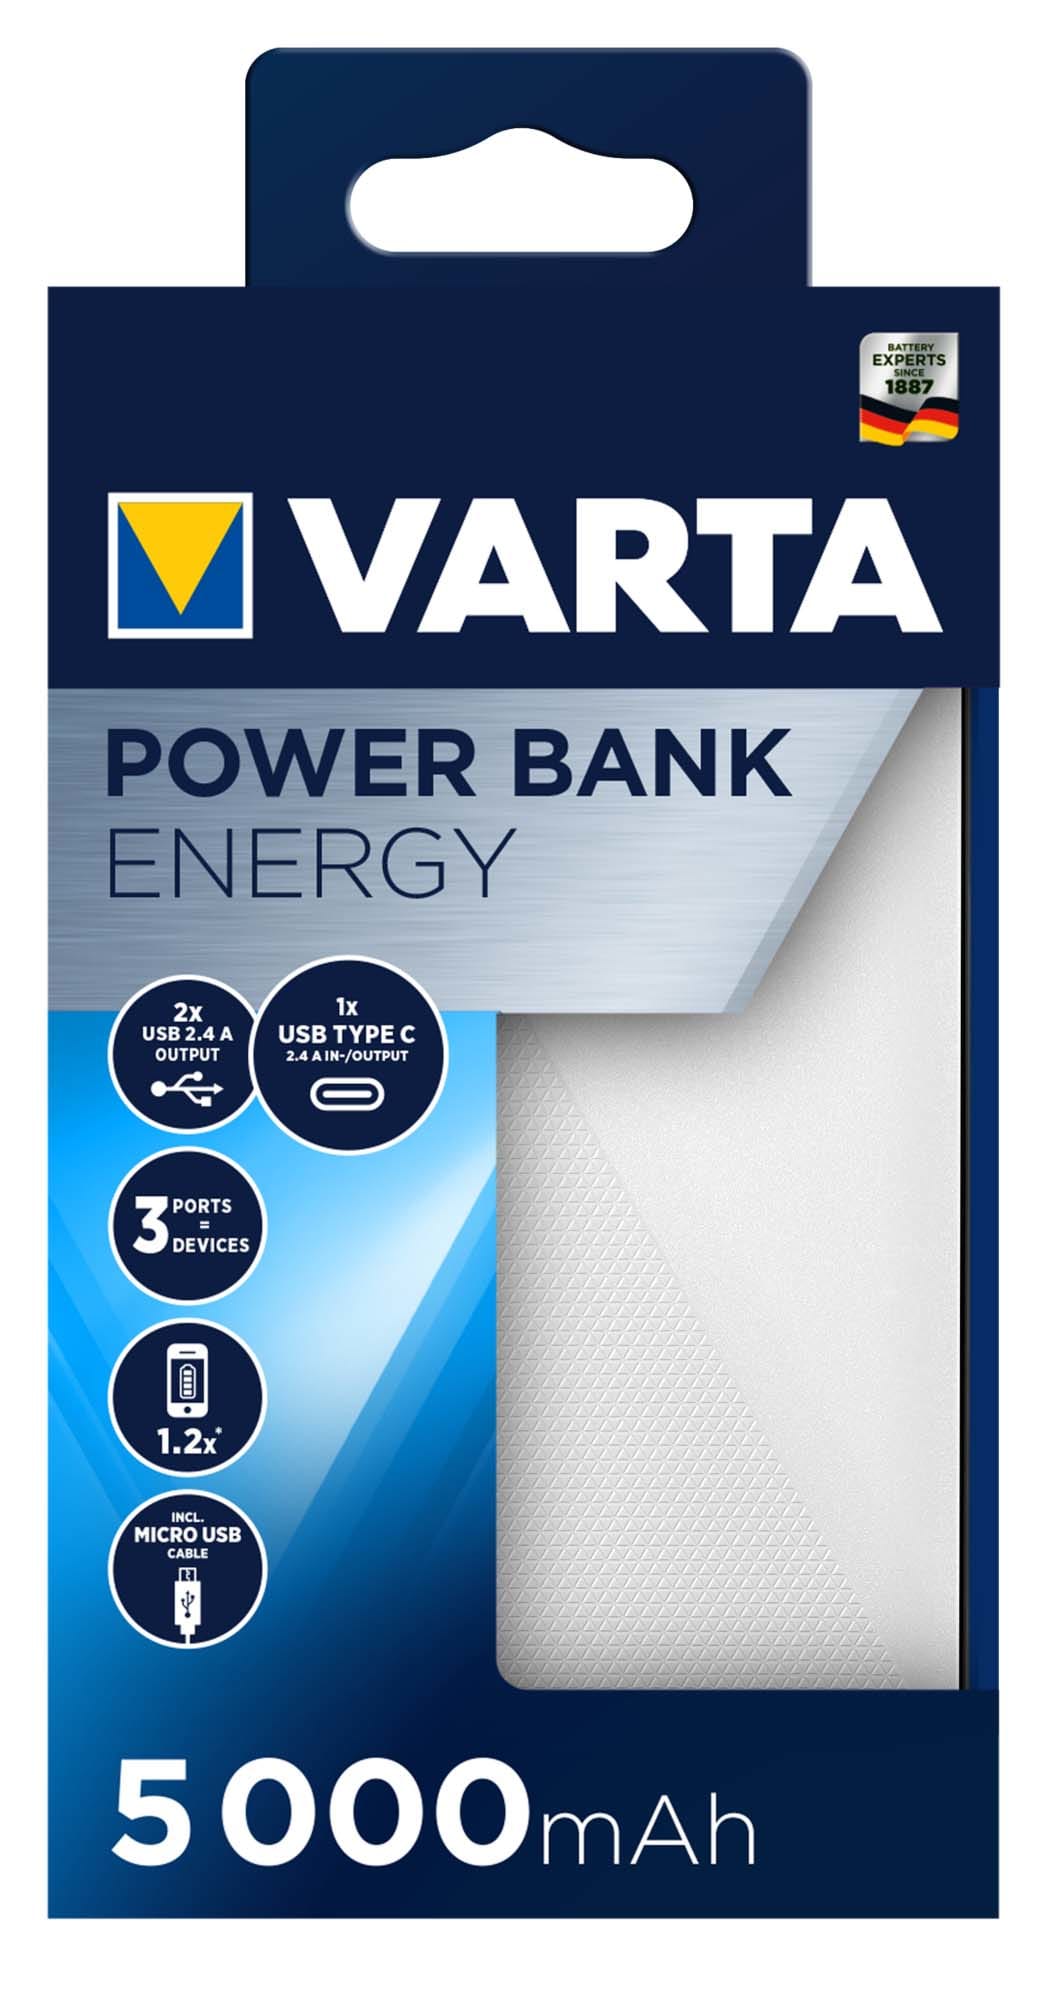 Varta - POWER BANK ENERGY 5000 mAh- cable Micro USB inclus